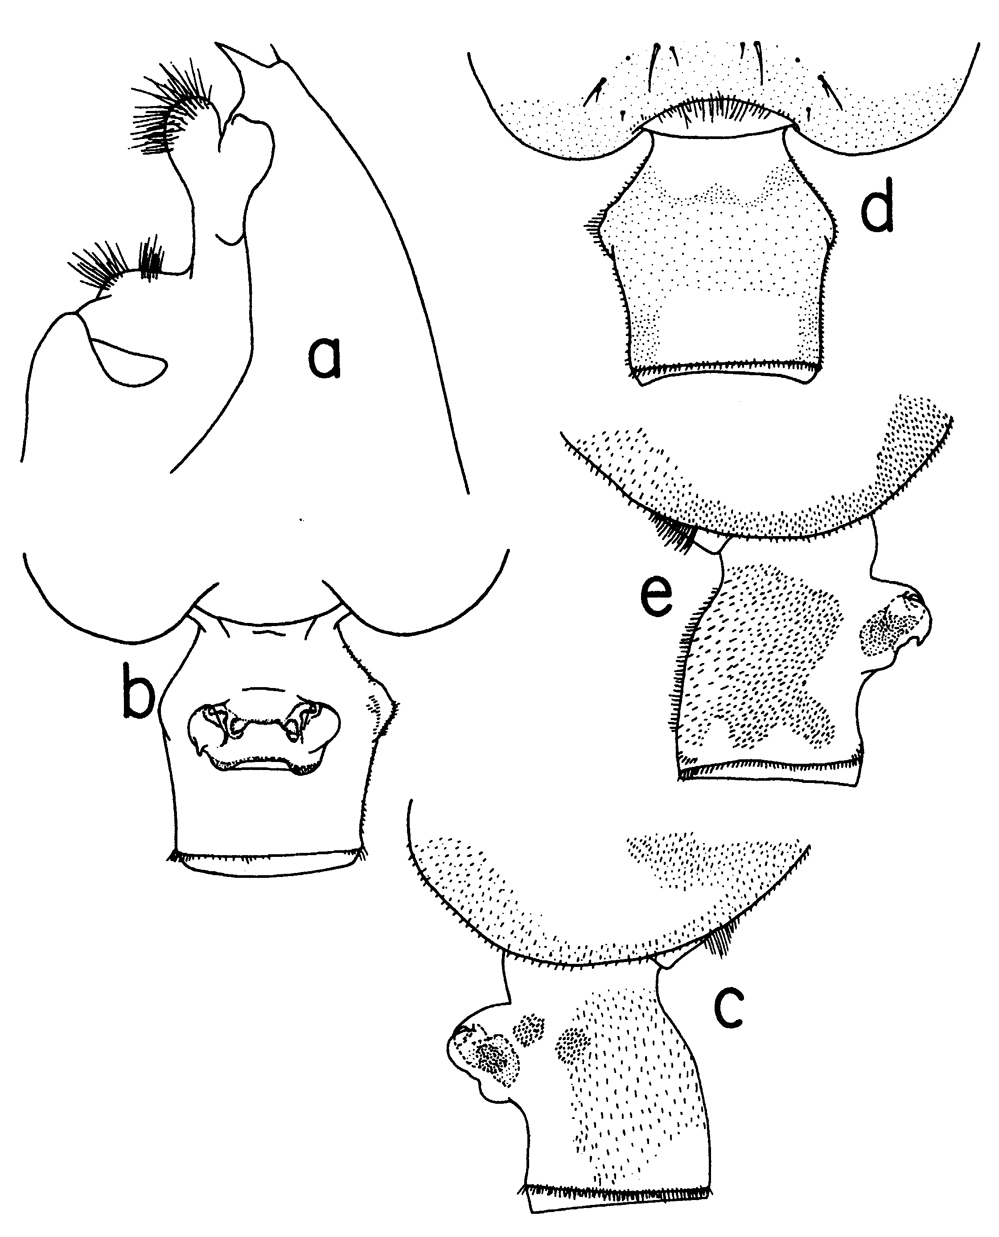 Species Euchaeta pubera - Plate 7 of morphological figures